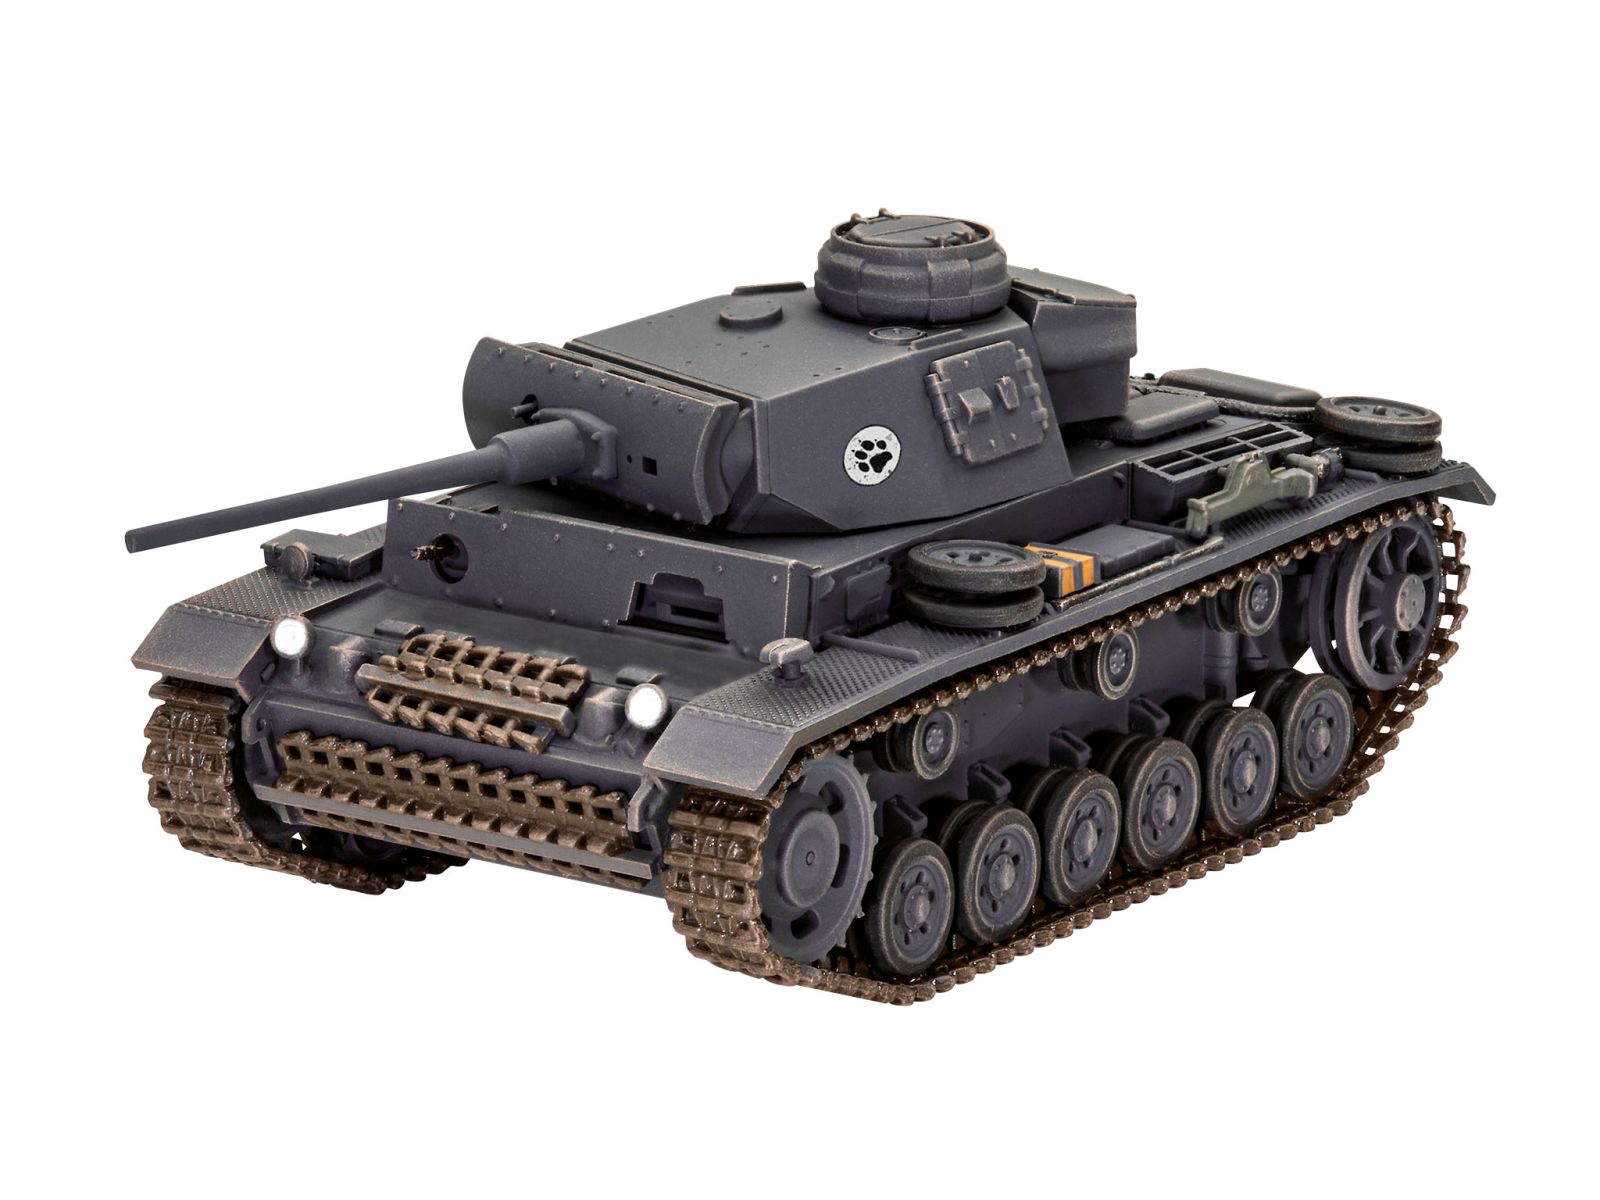 Revell 03501 - Panzer III "World of Tanks"